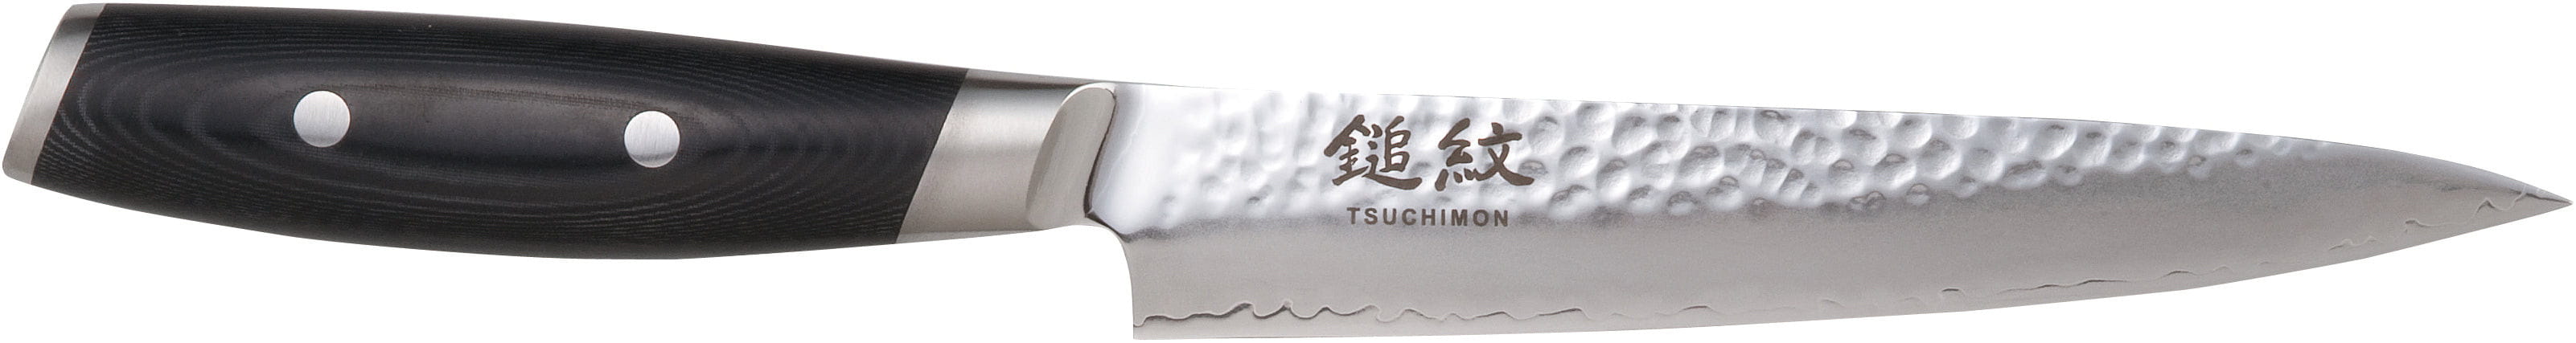 Yaxell Tsuchimon Carving Messer, 18 cm